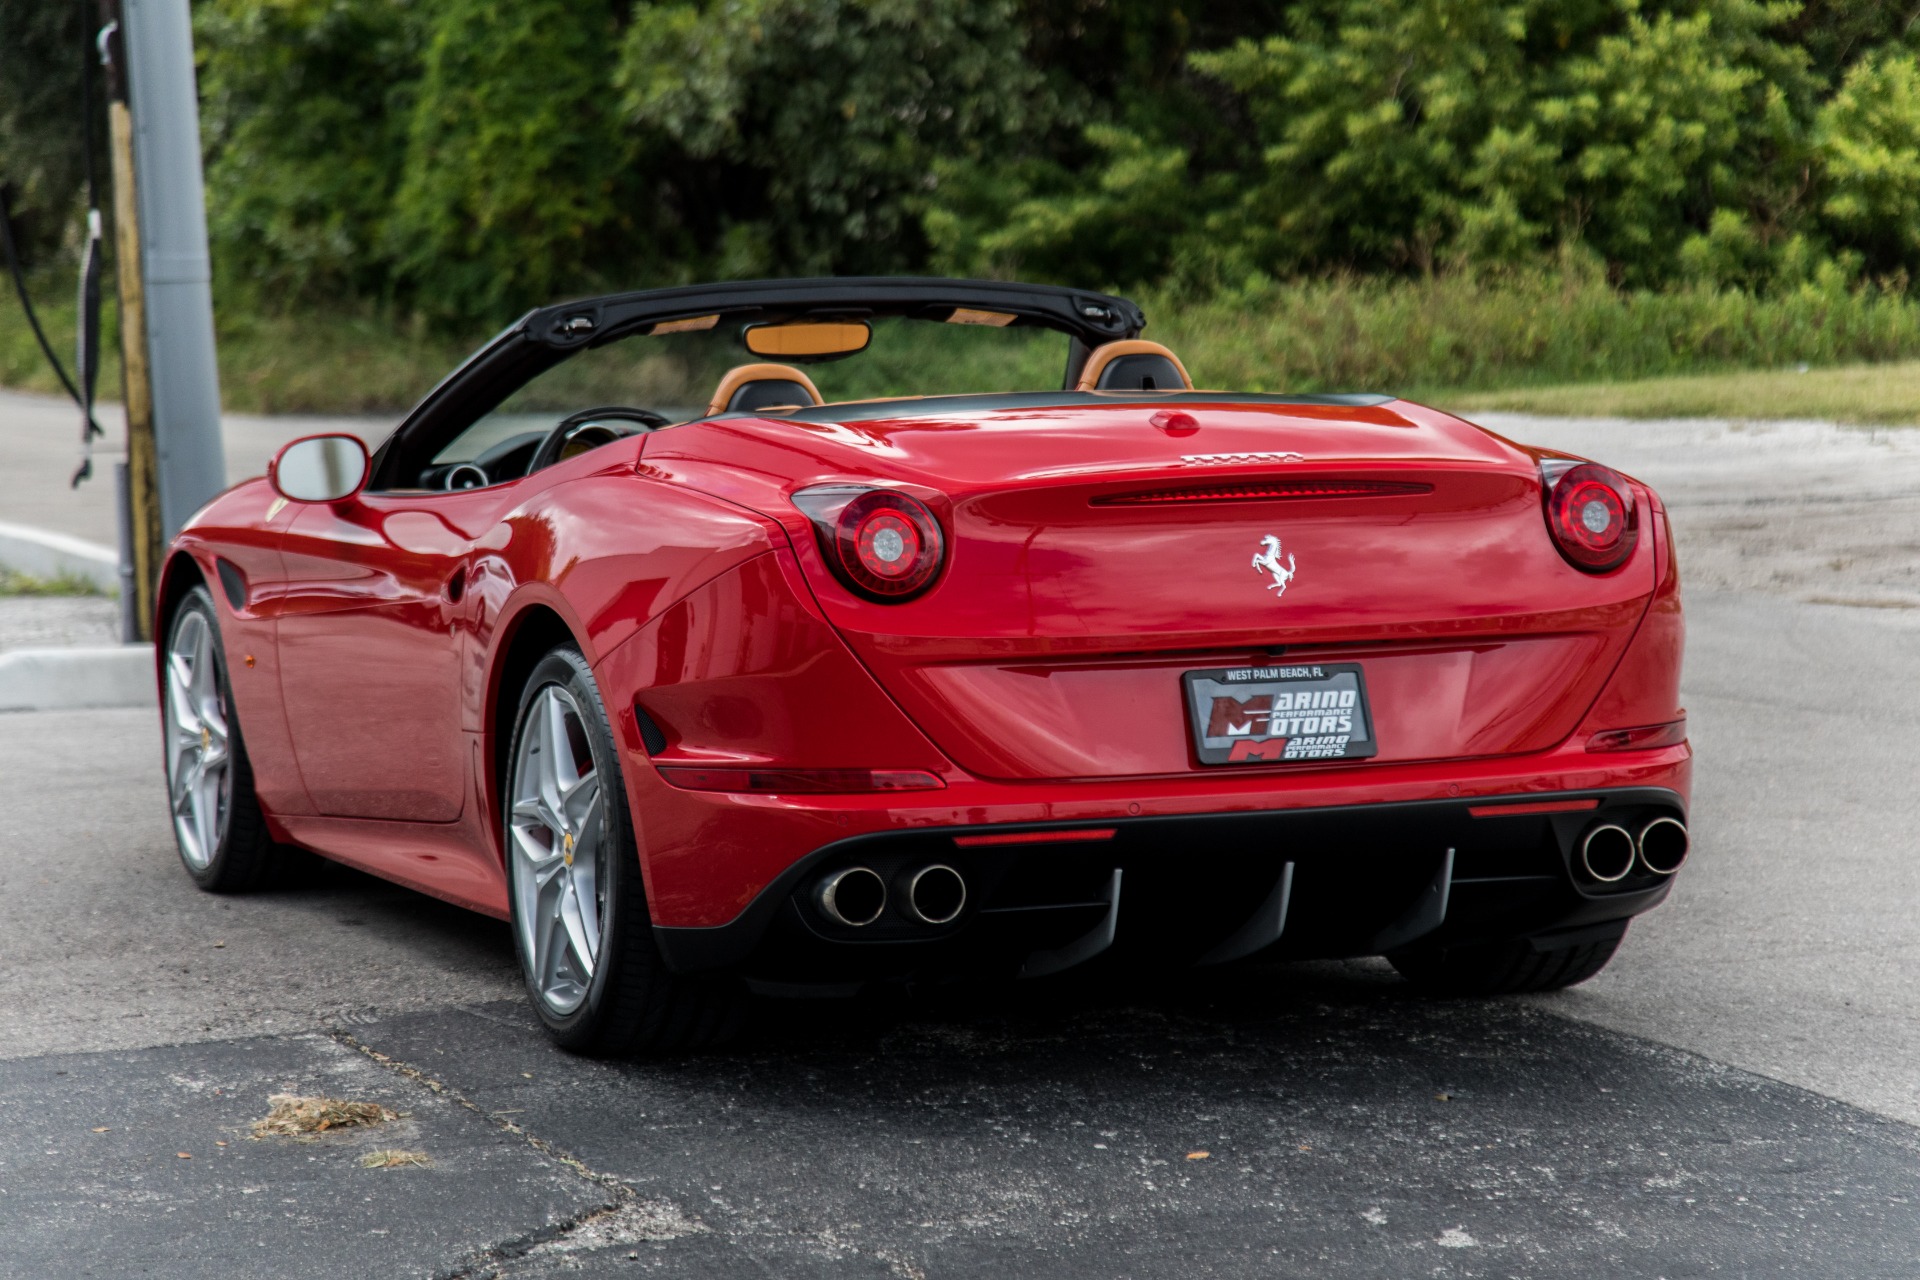 Used 2016 Ferrari California T For Sale 149 900 Marino Performance 